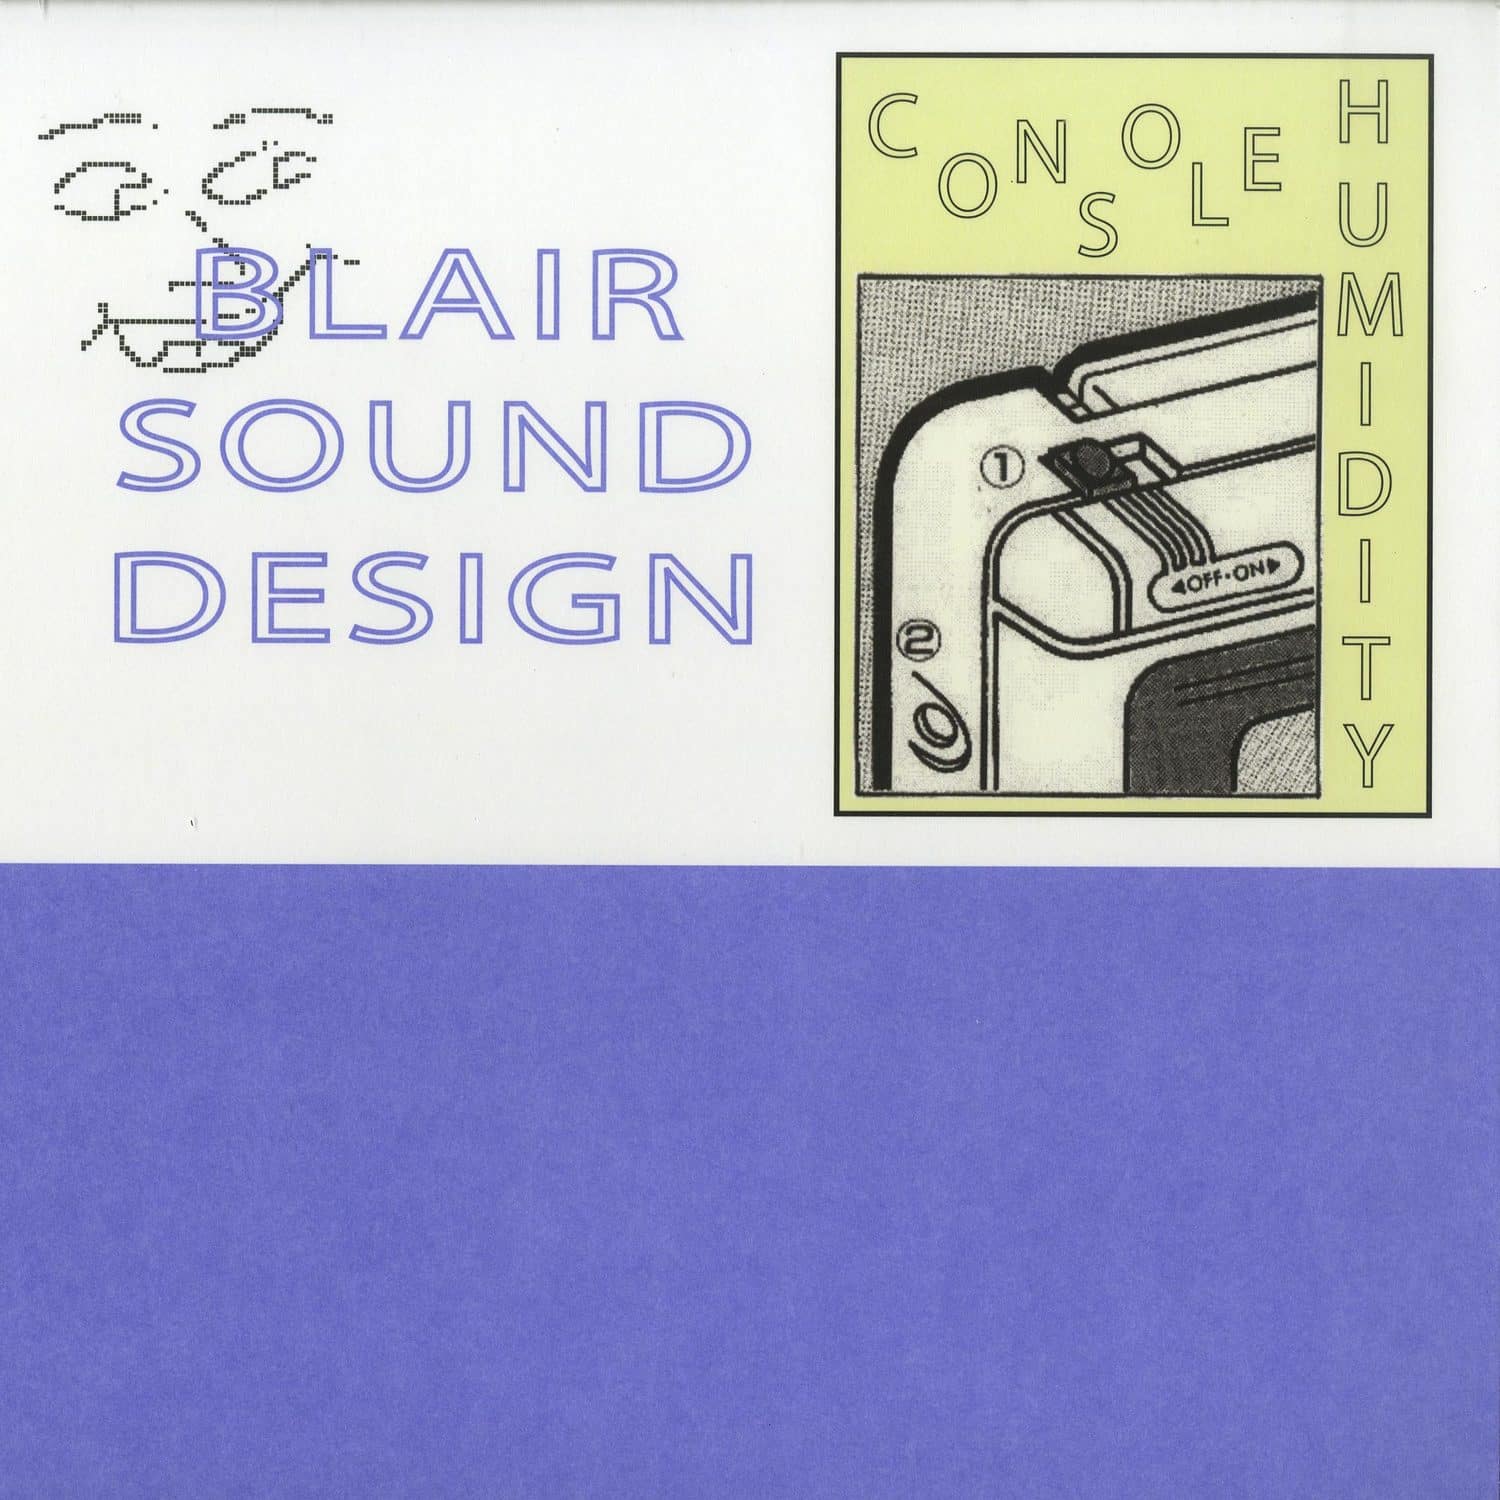 Blair Sound Design - CONSOLE HUMIDITY